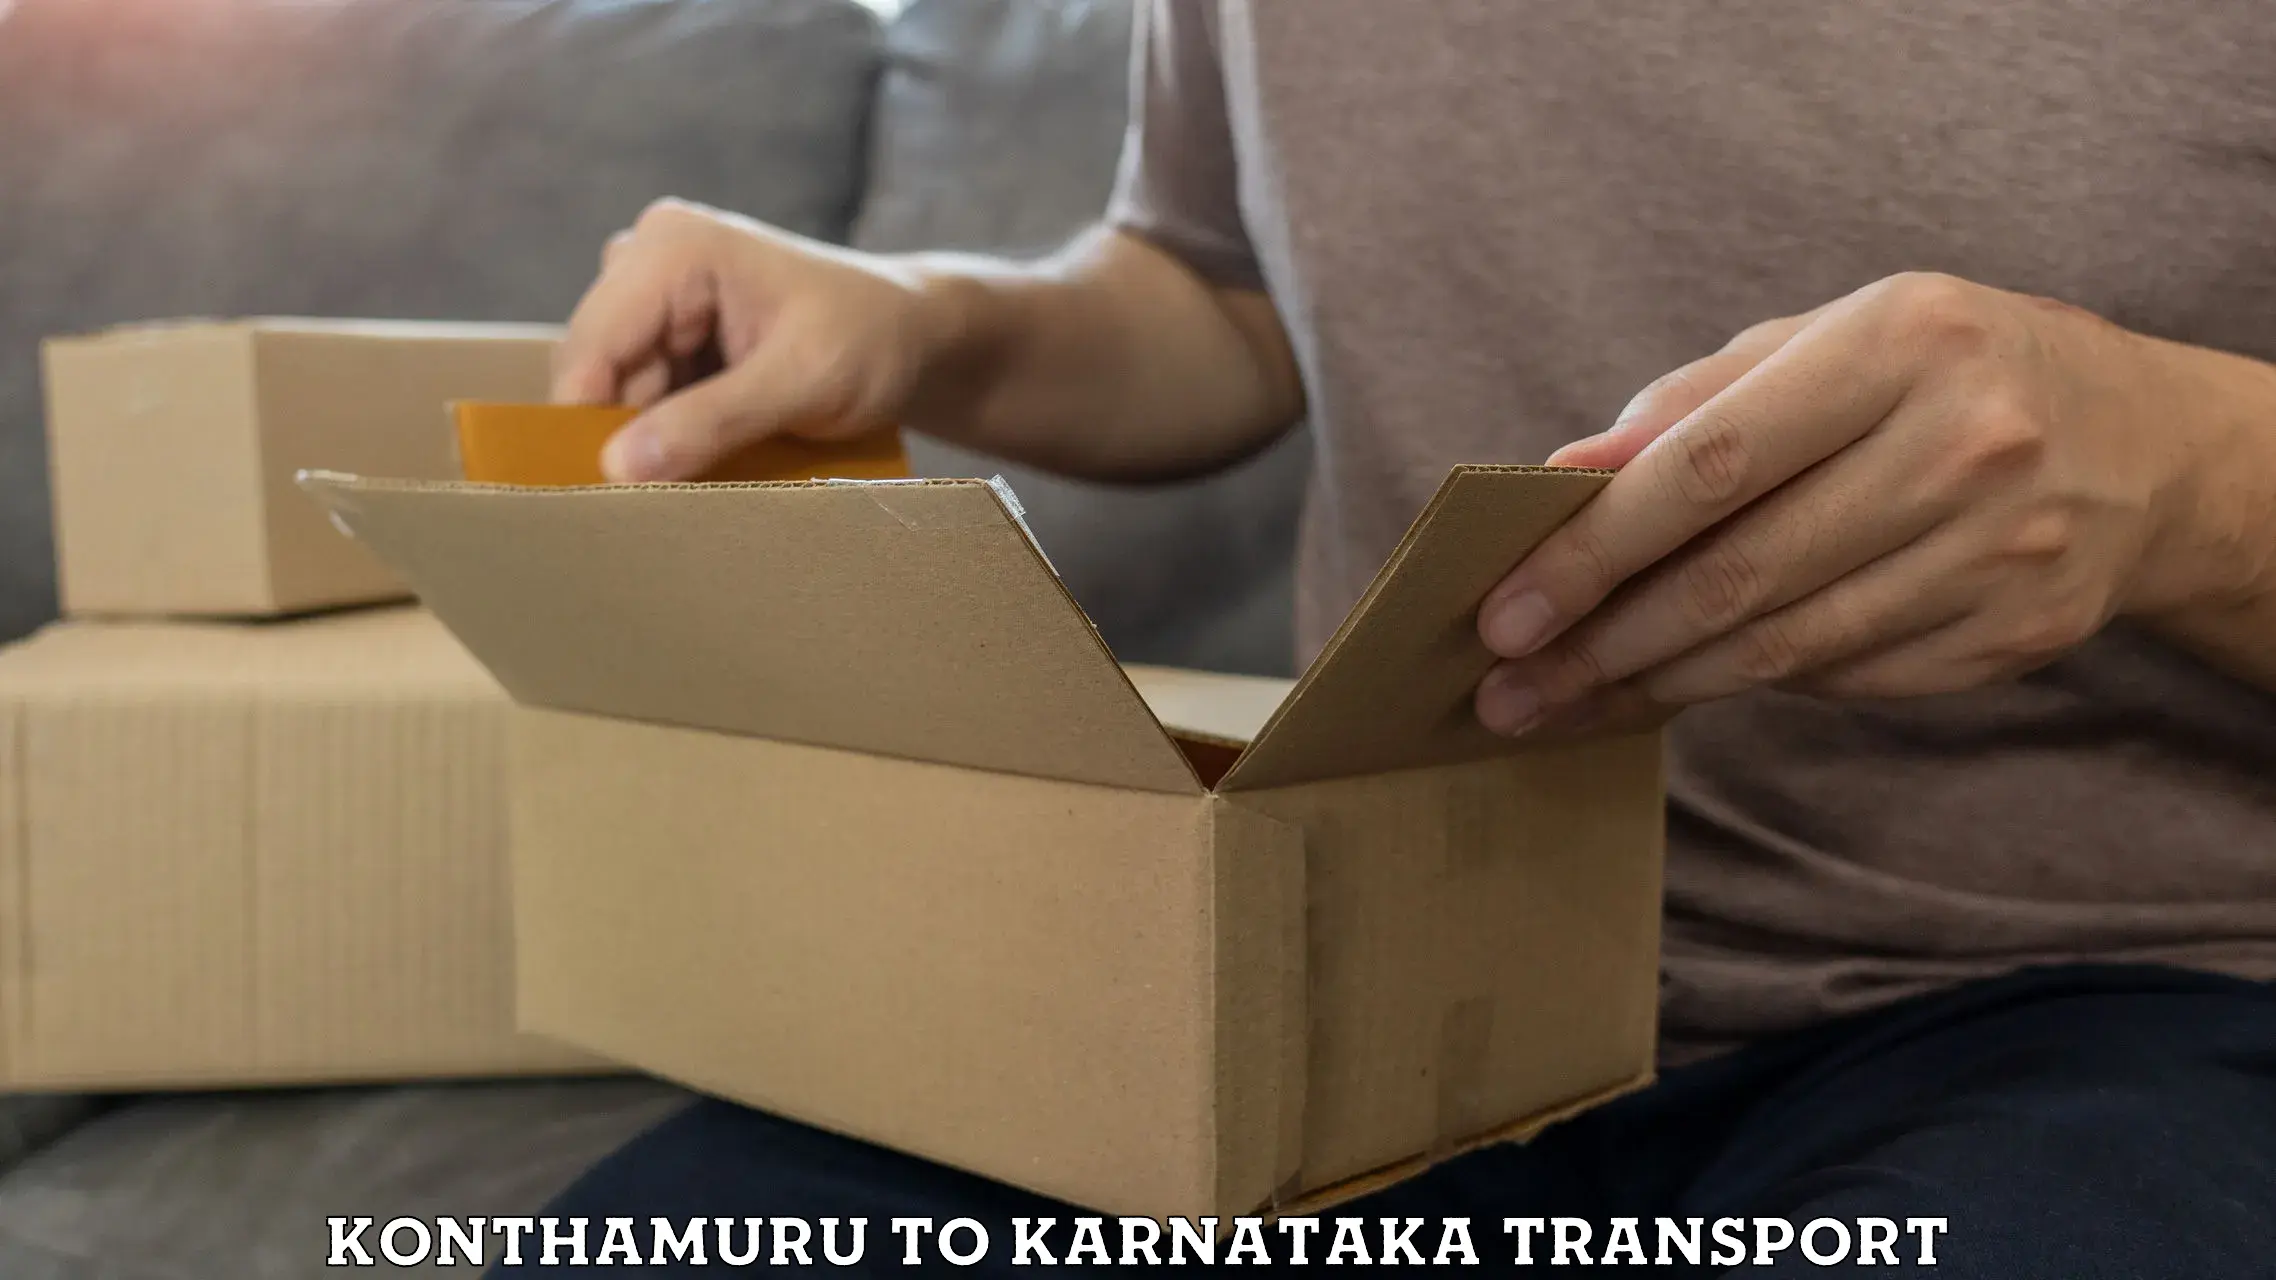 Delivery service Konthamuru to Karnataka